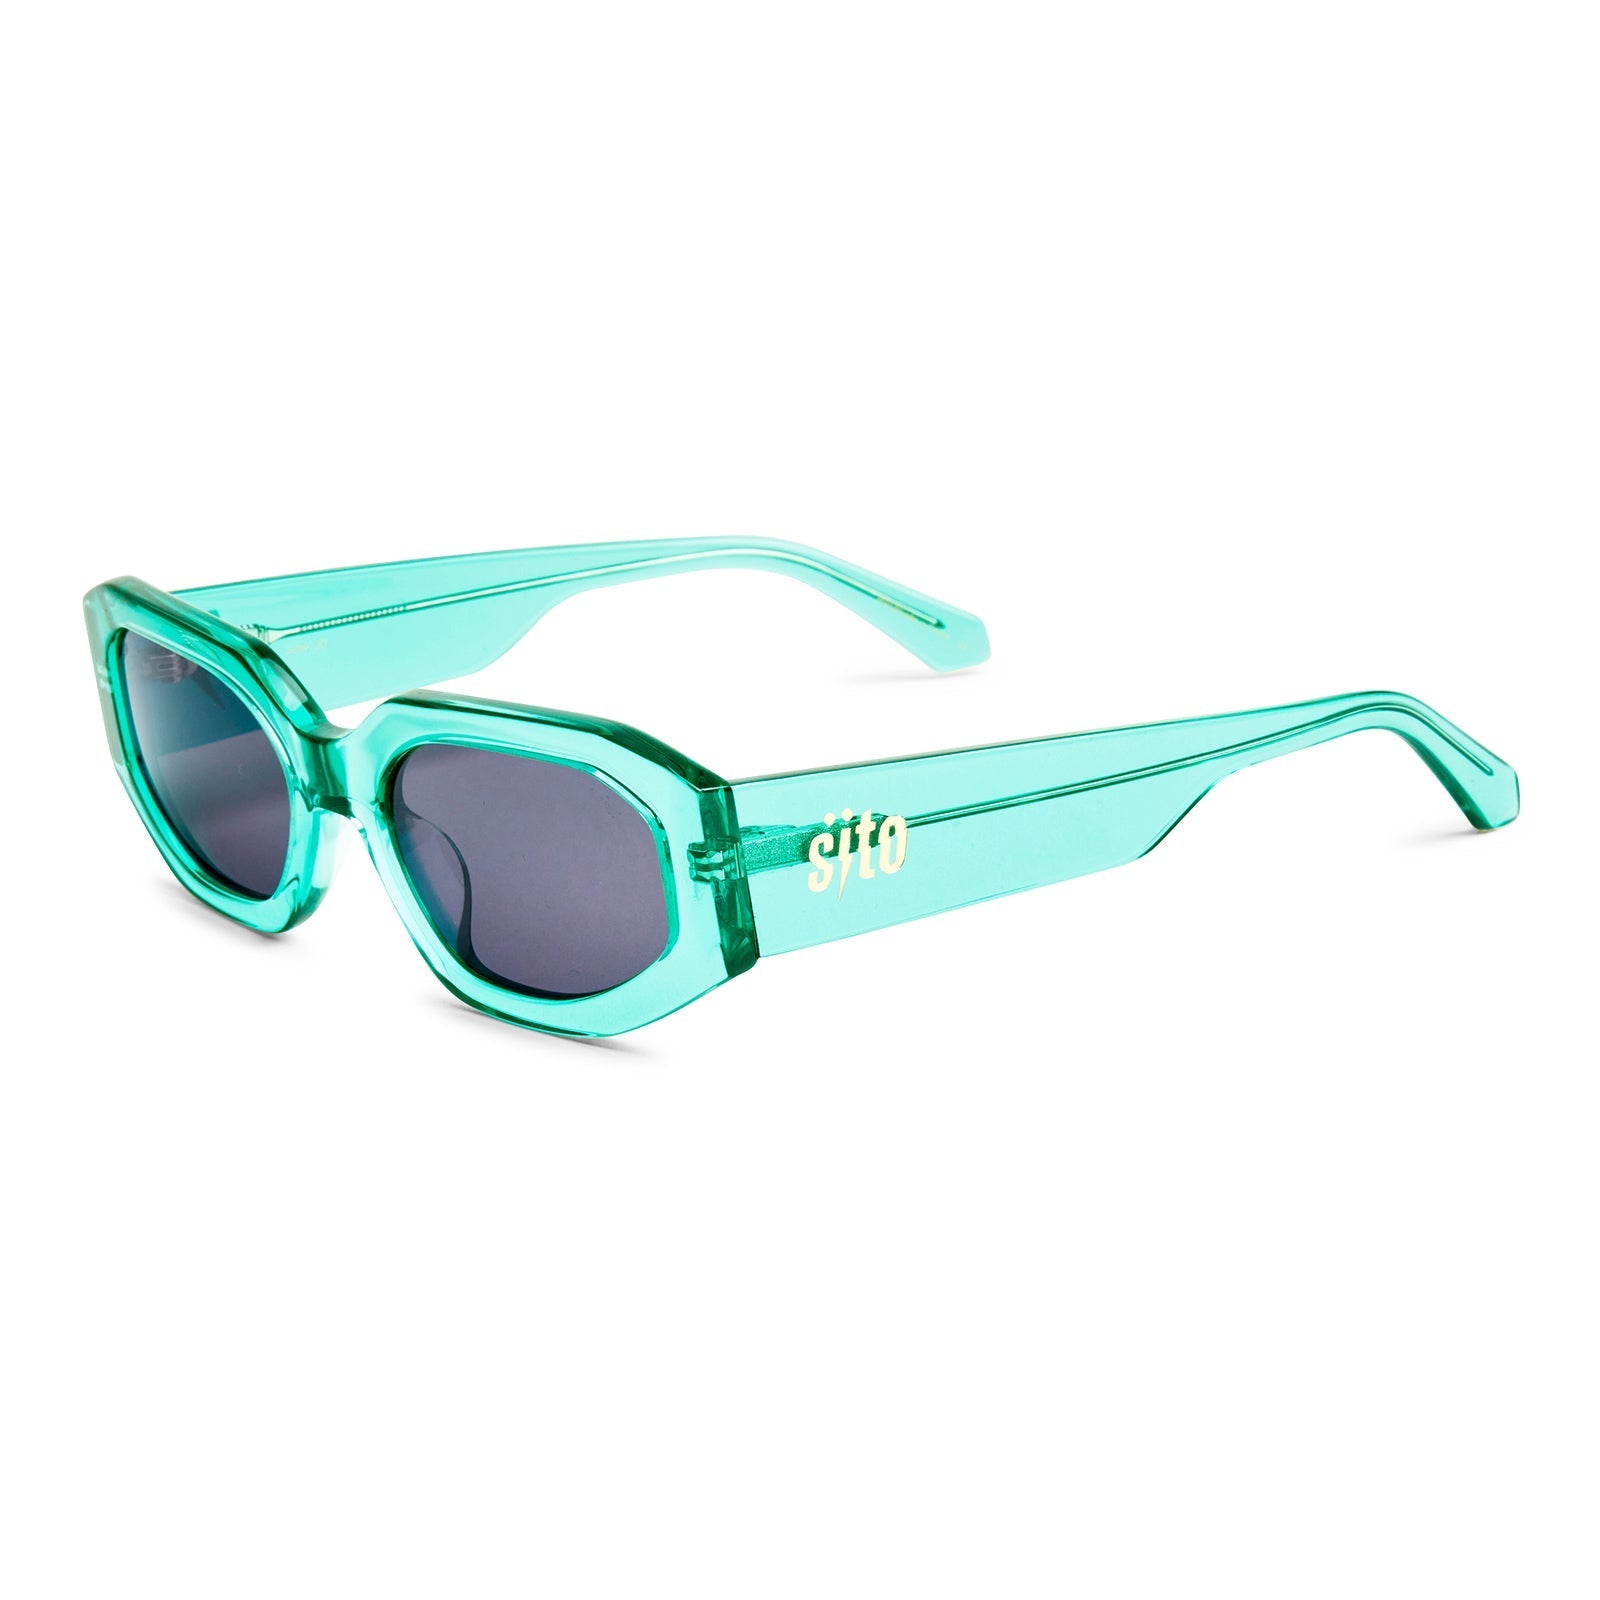 sito Juicy Polarized Sunglasses.